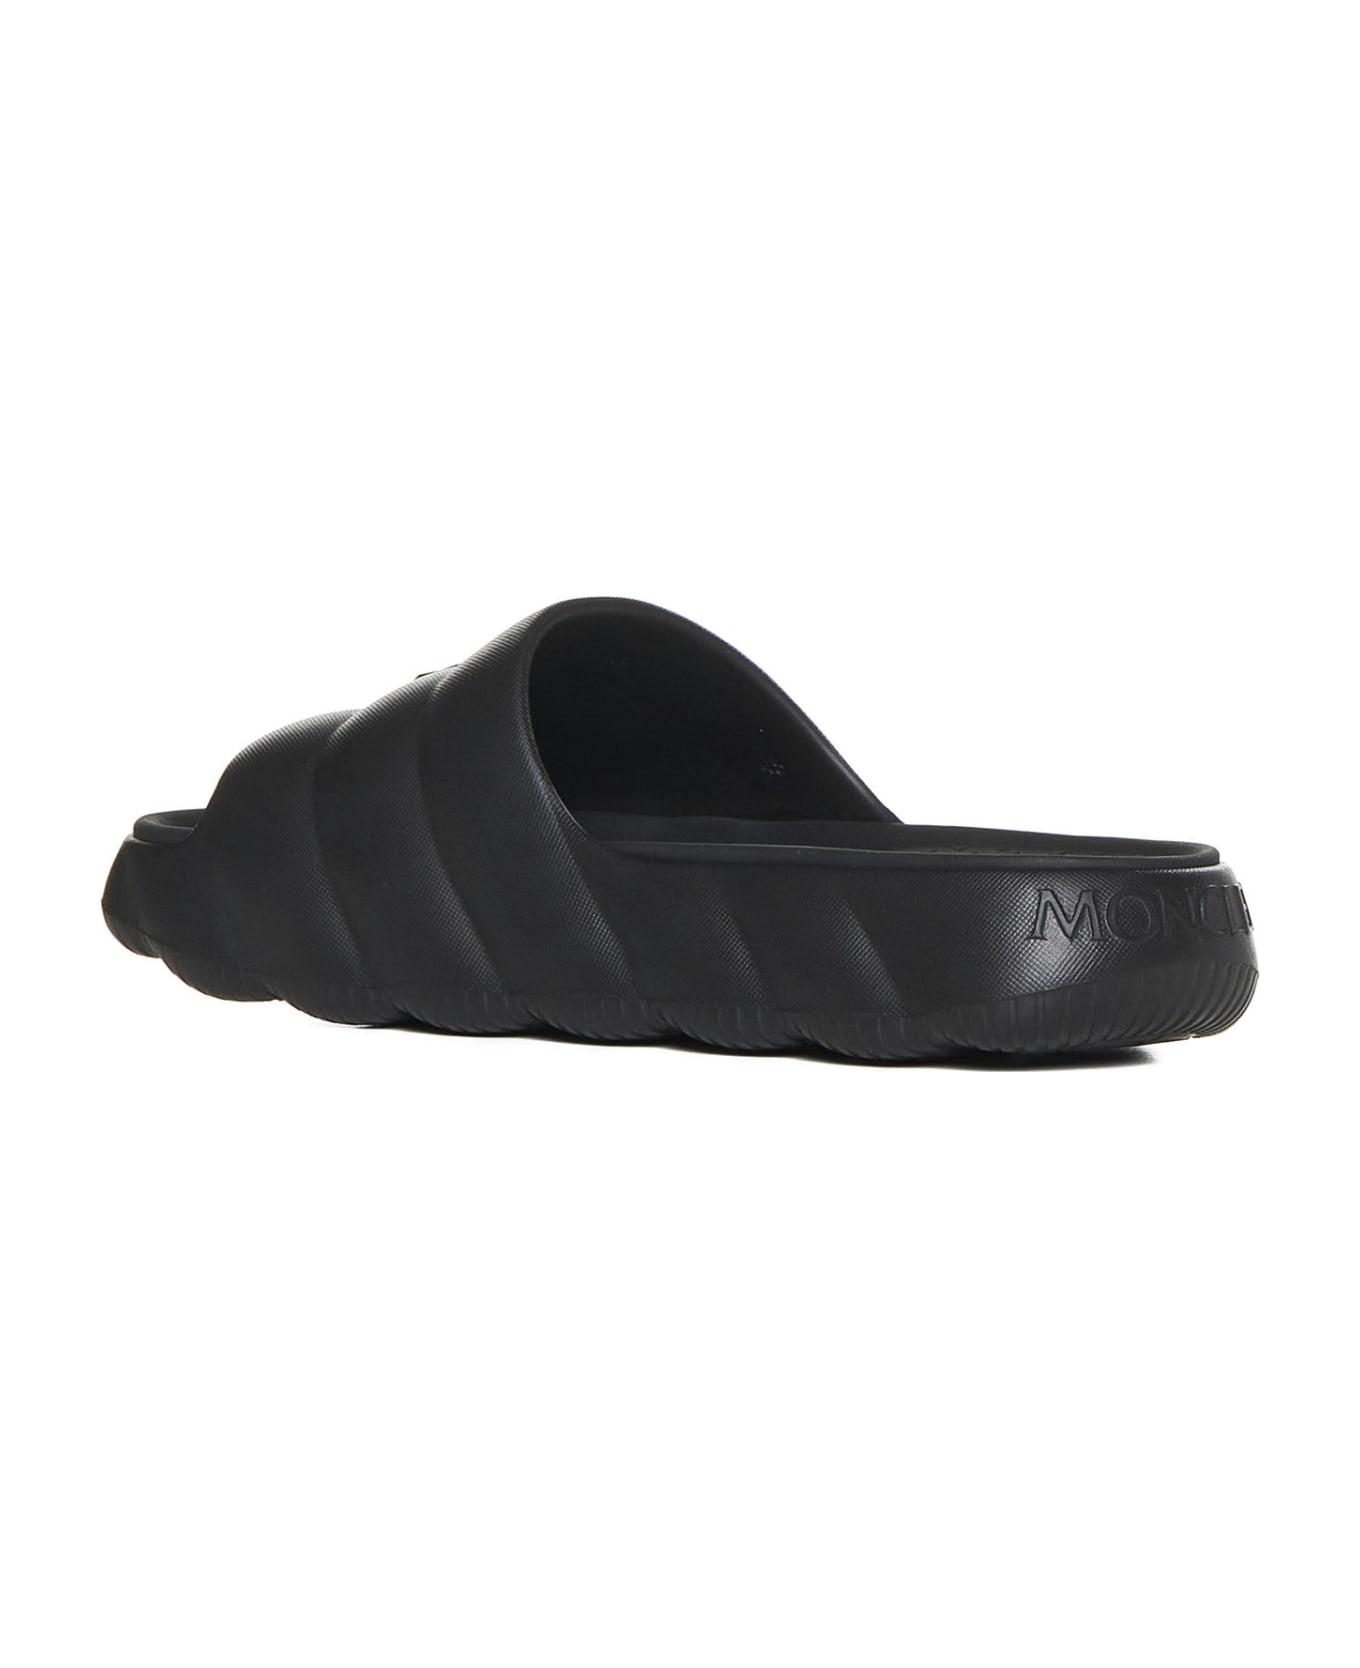 Moncler Shoes - Nero